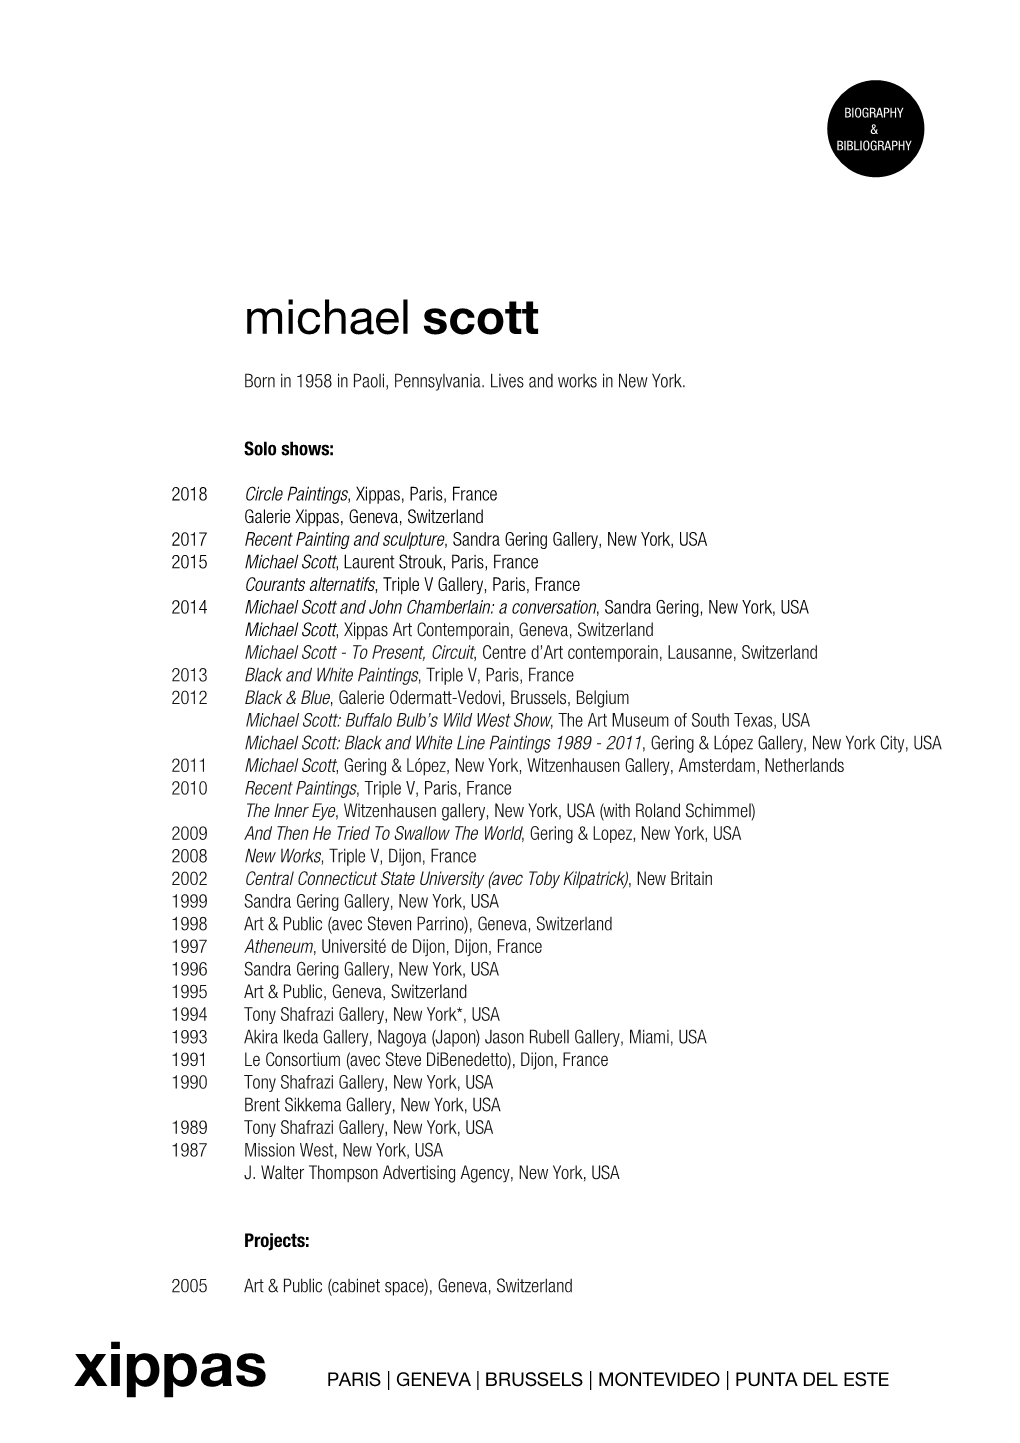 Michael Scott